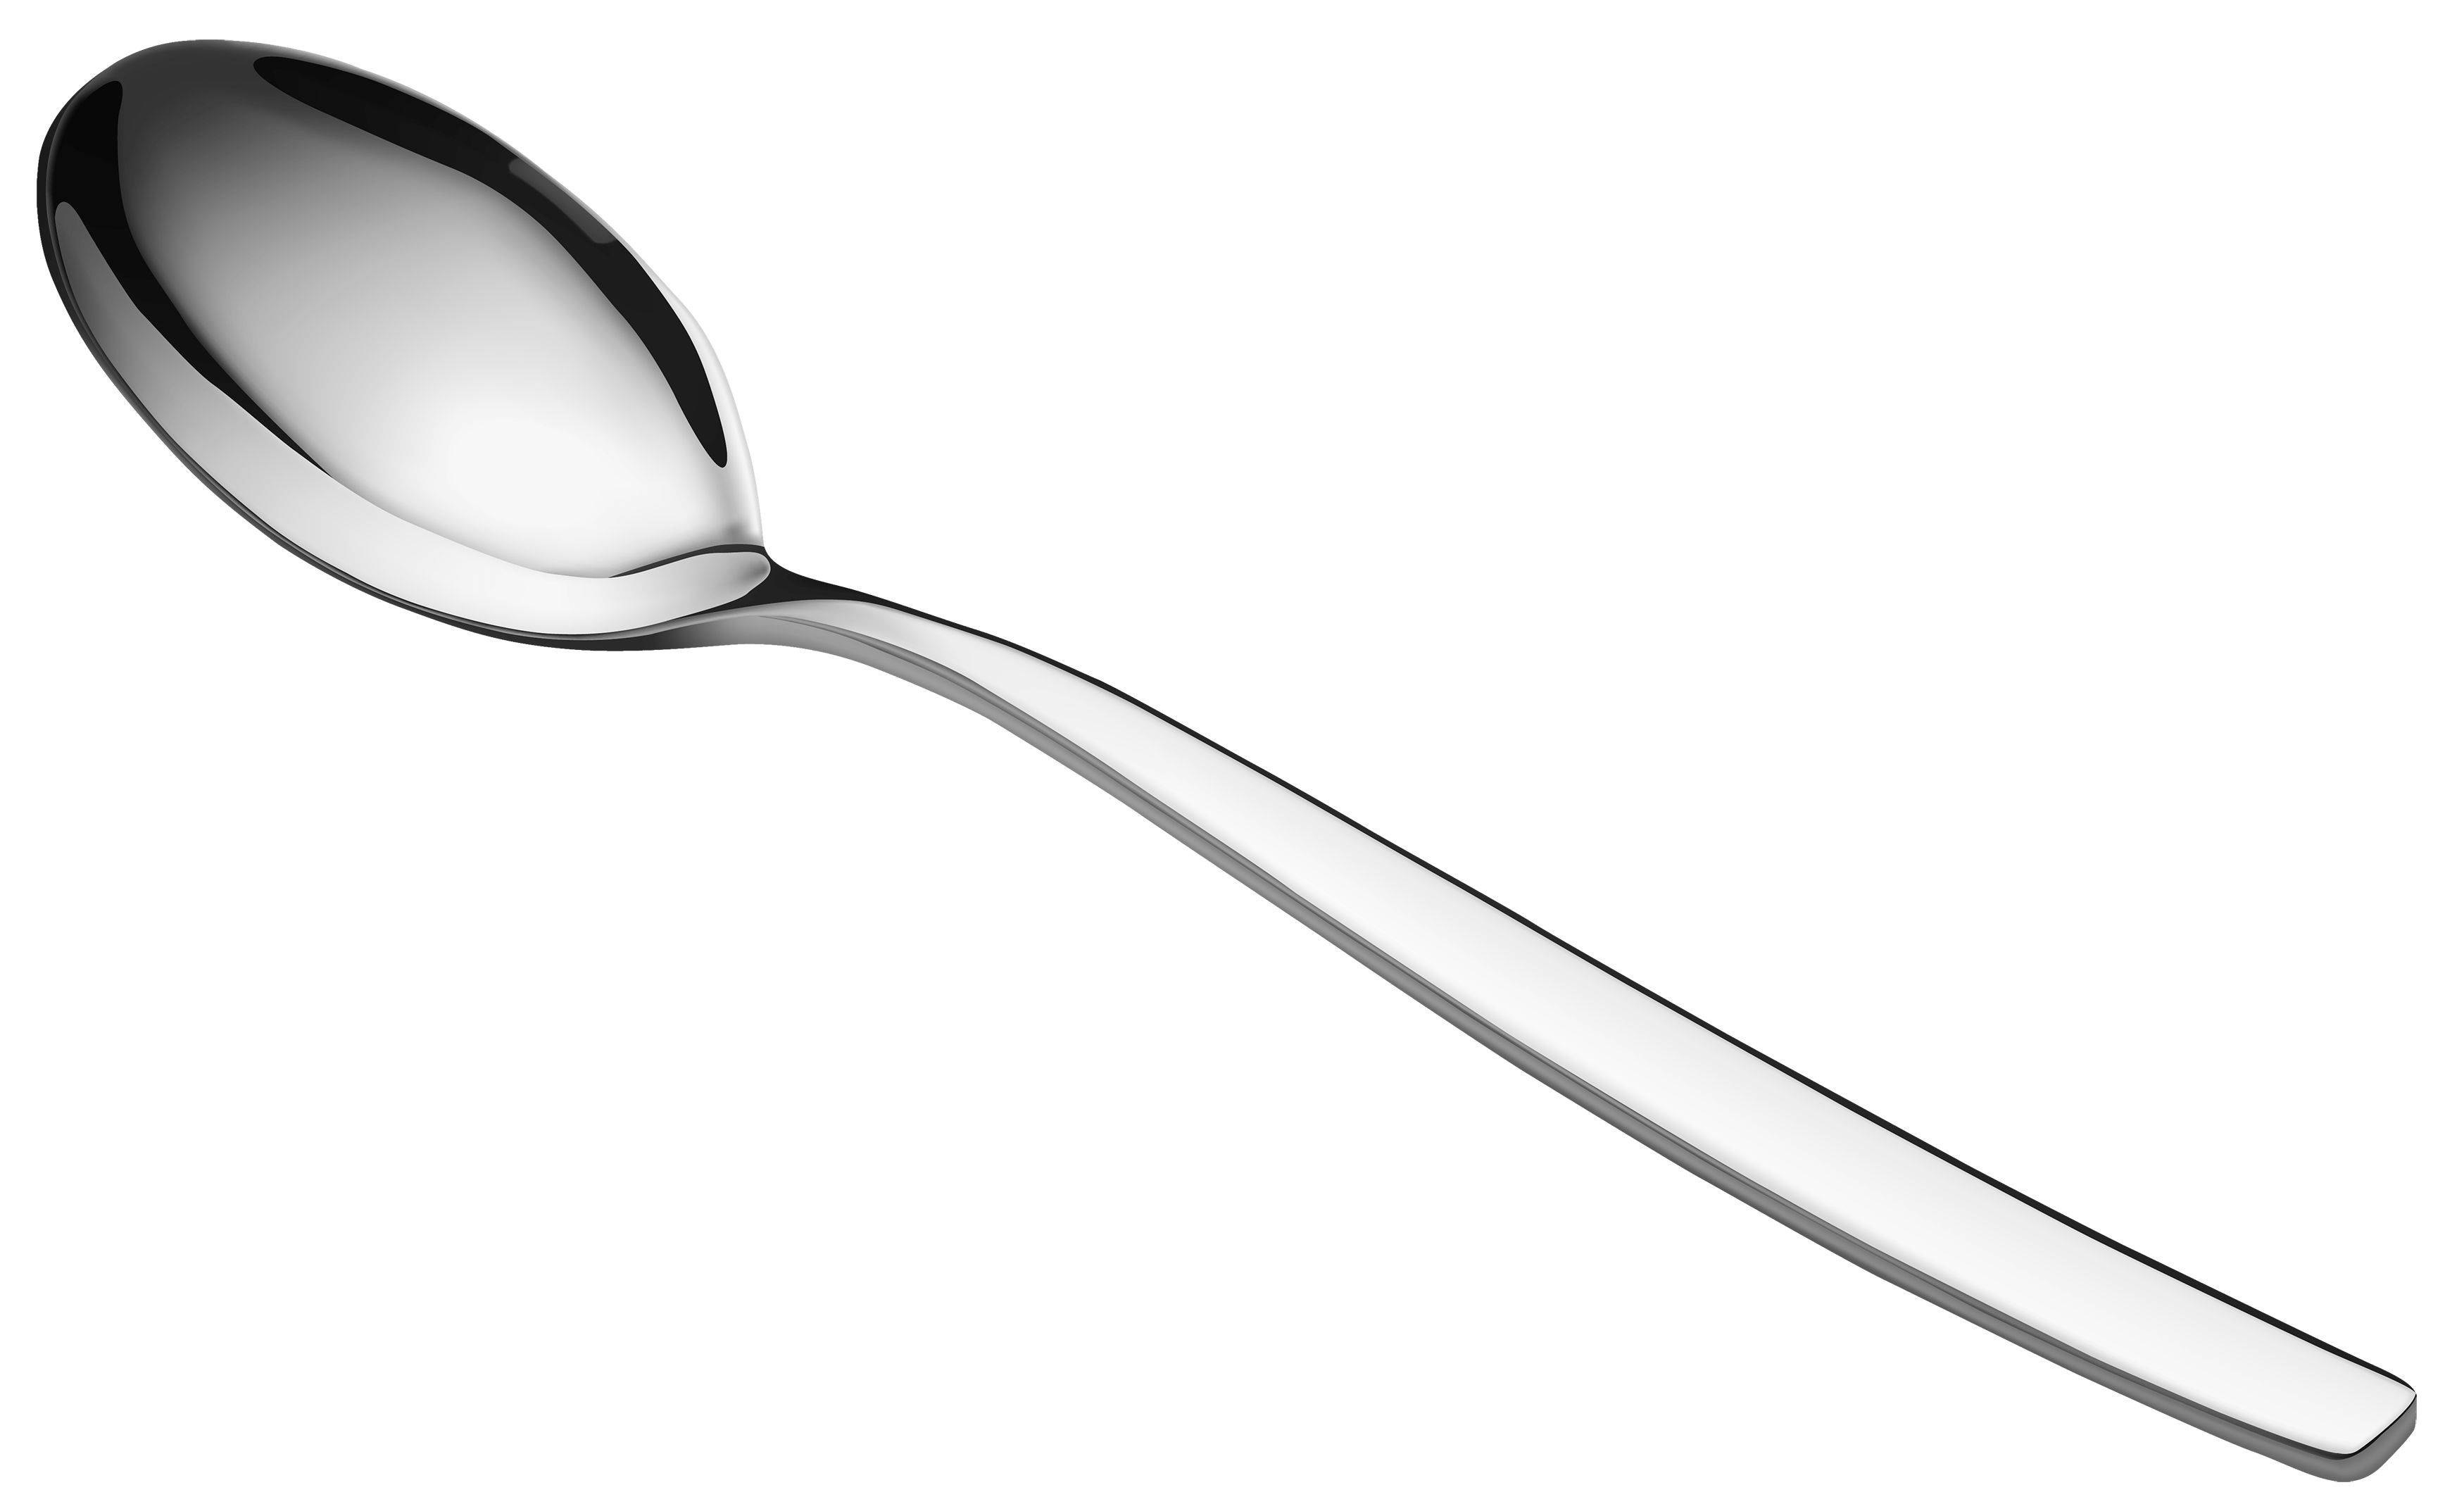 Spoon clipart